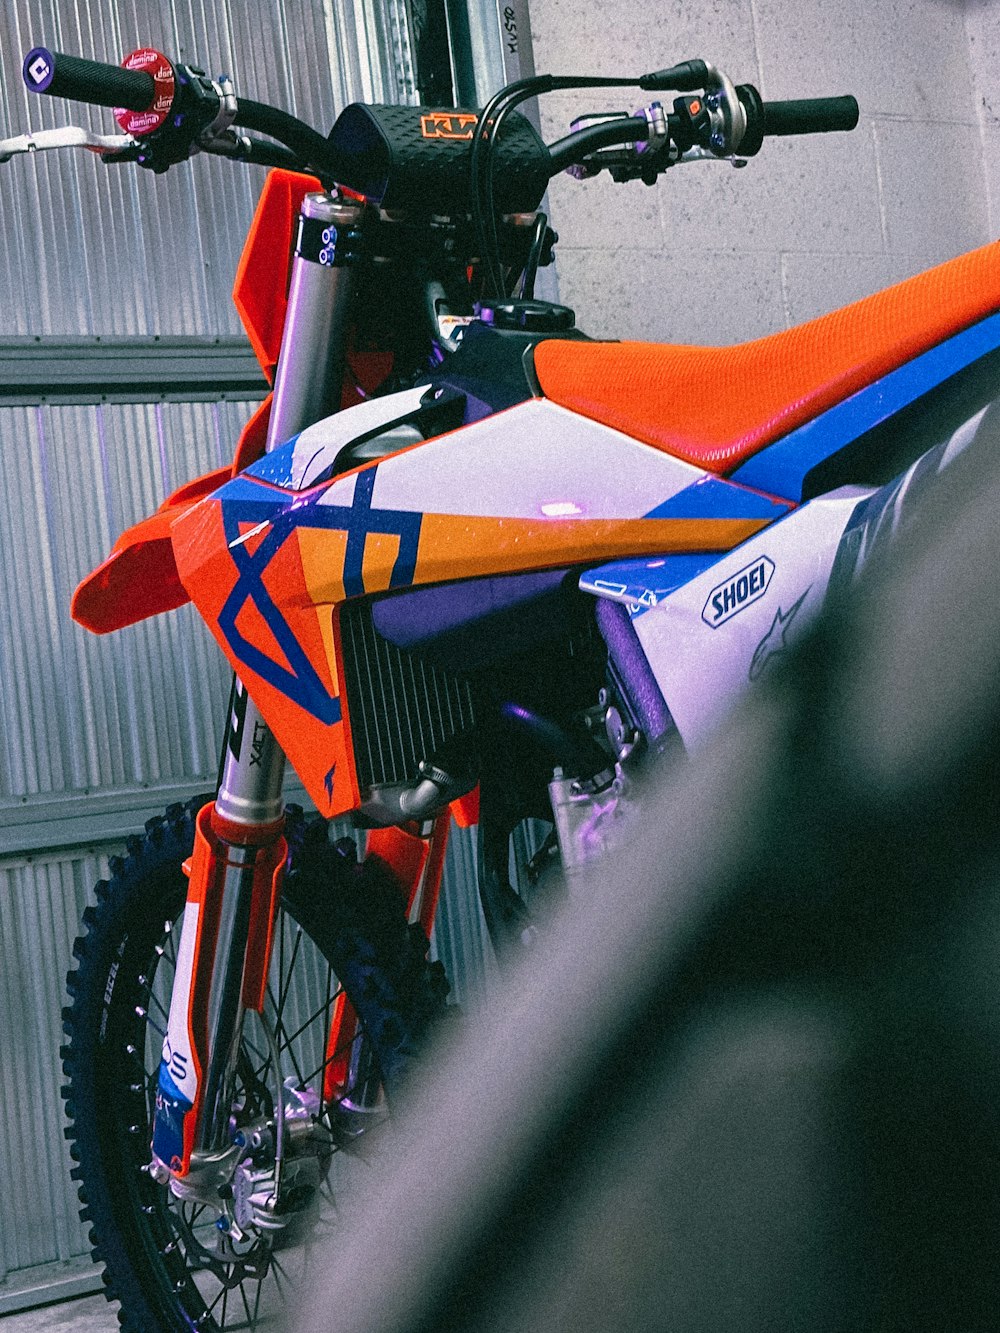 an orange and blue dirt bike parked in a garage